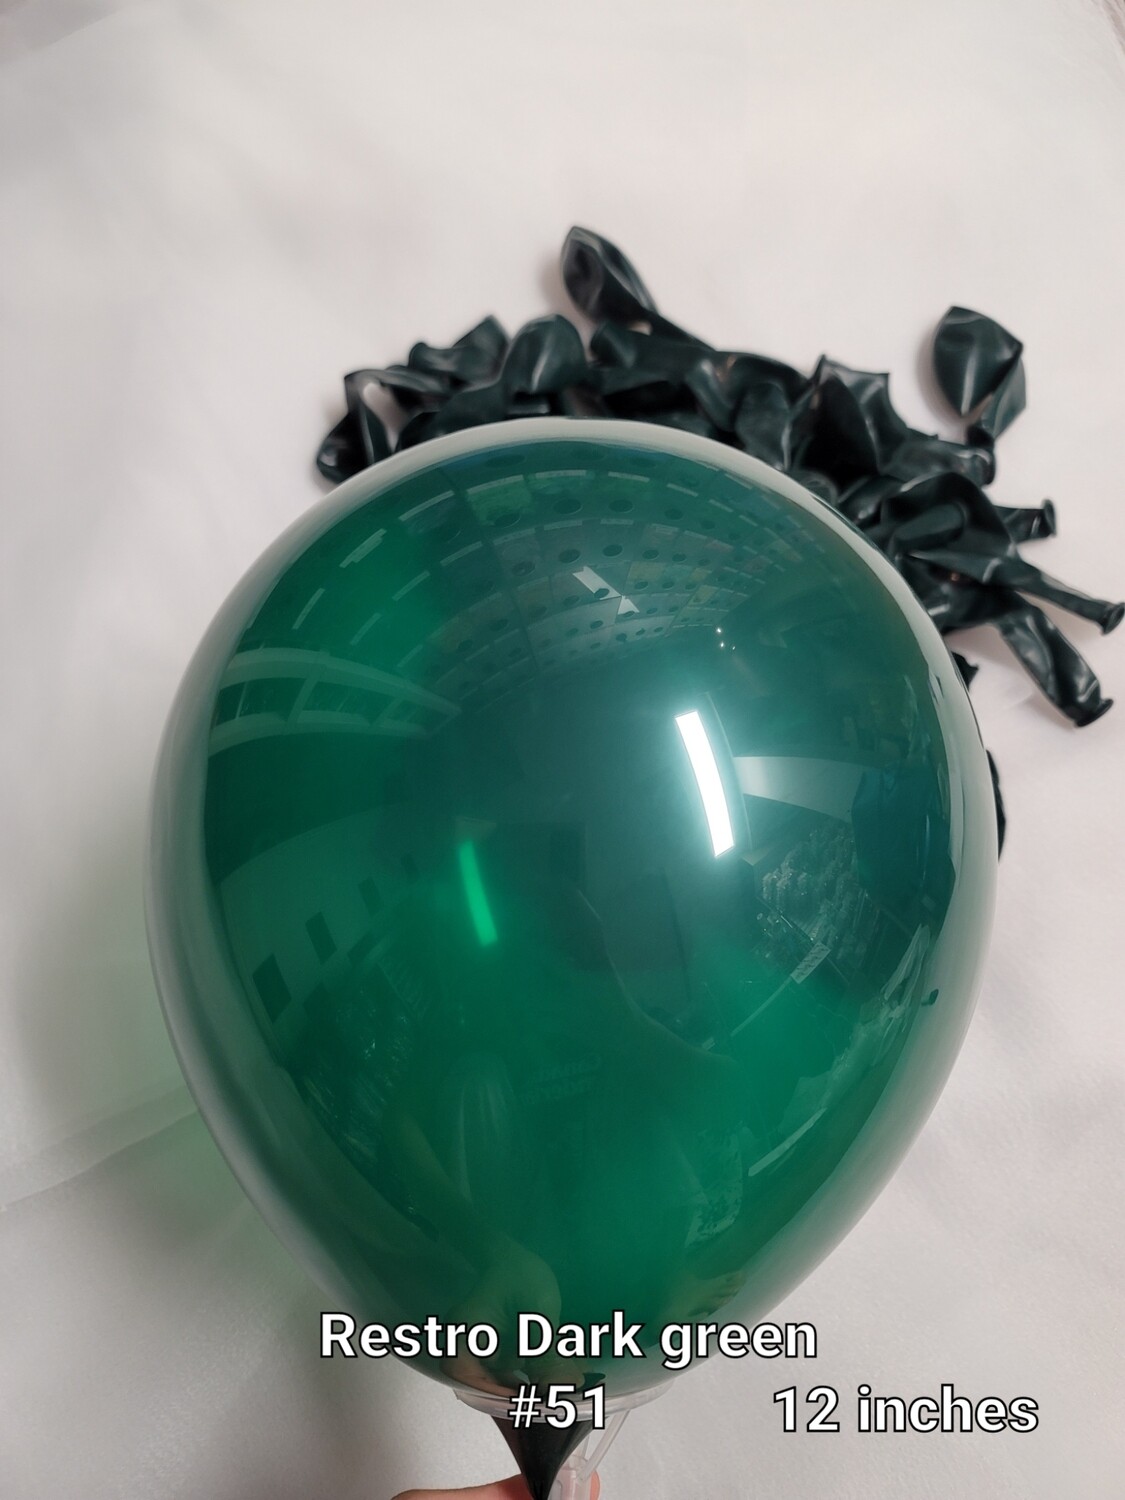 Restro dark green balloon